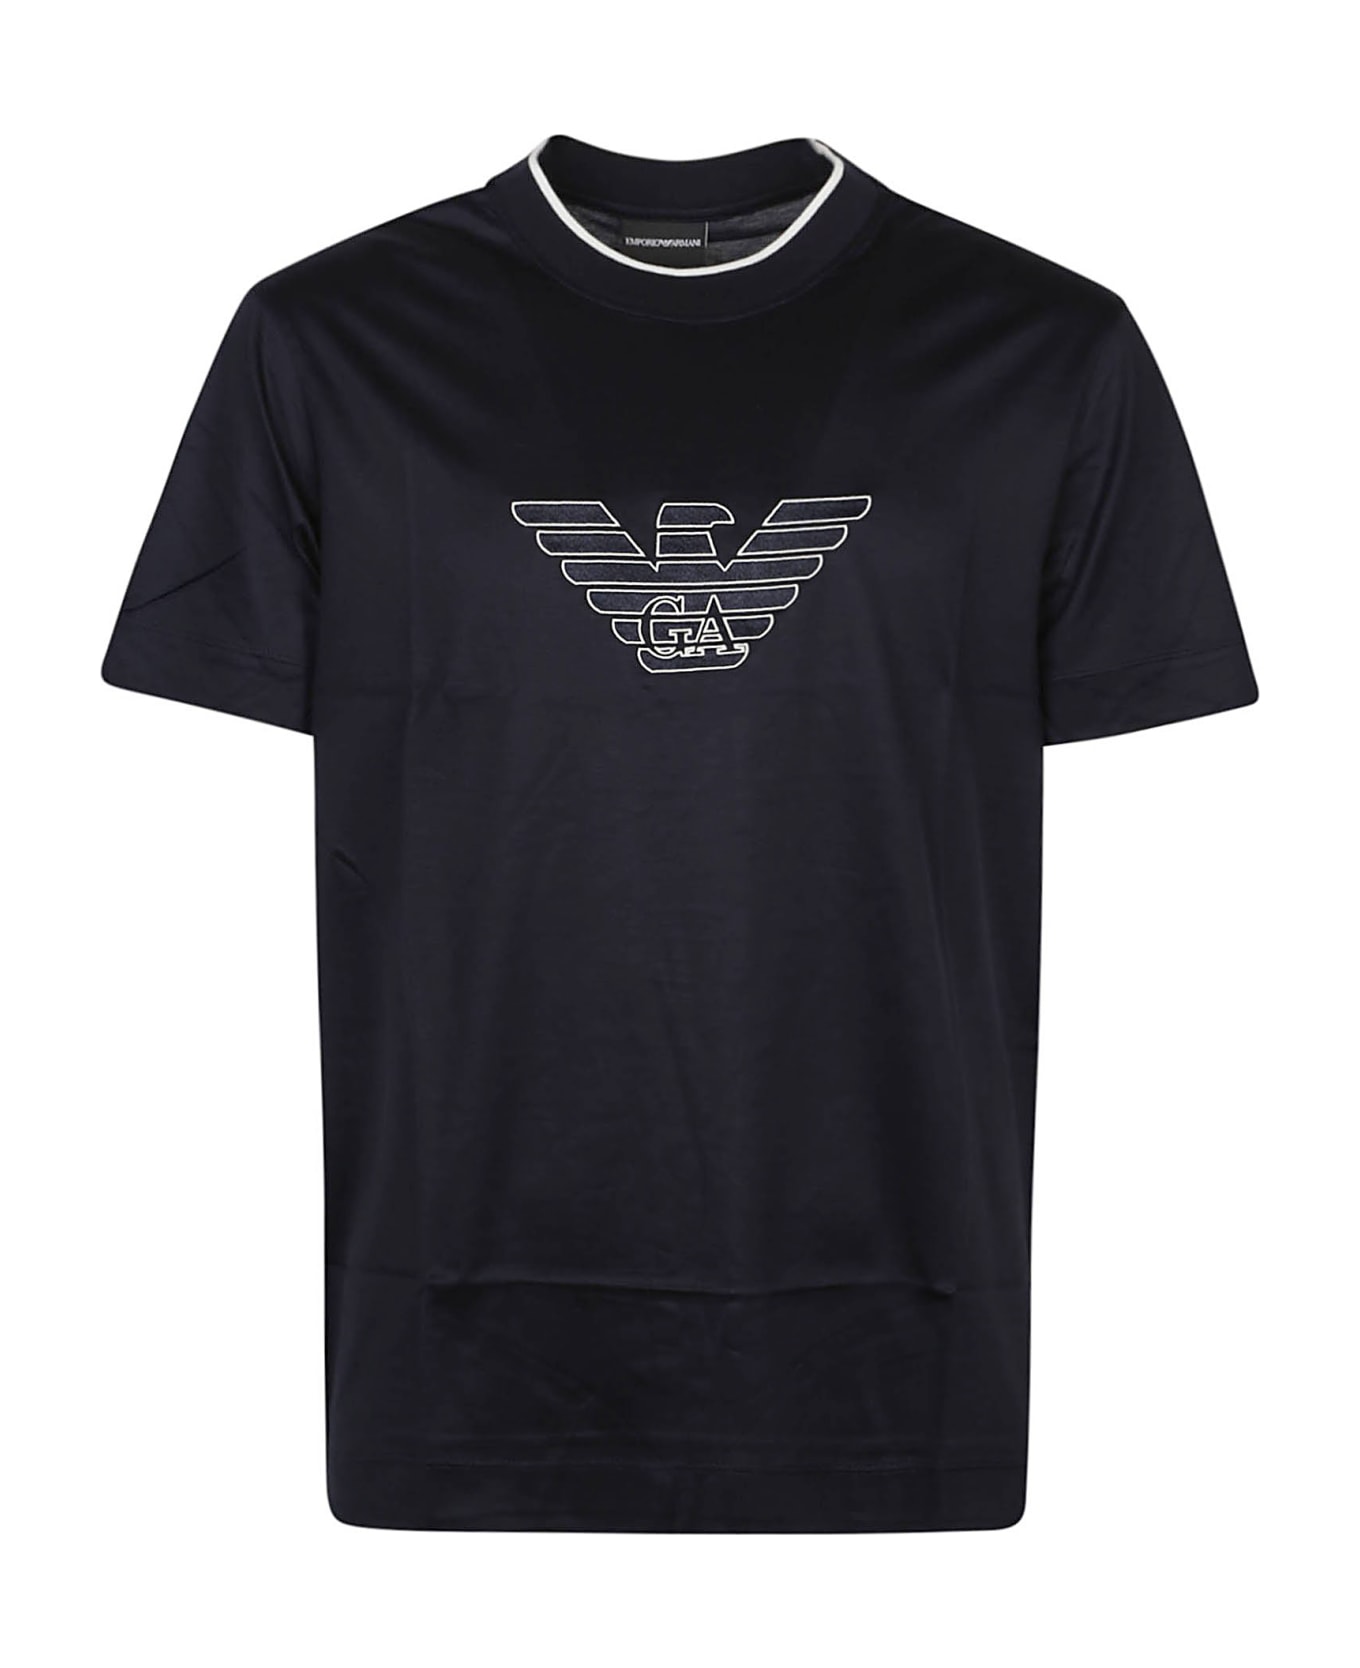 Emporio Armani T-shirt - Eagle Navy シャツ